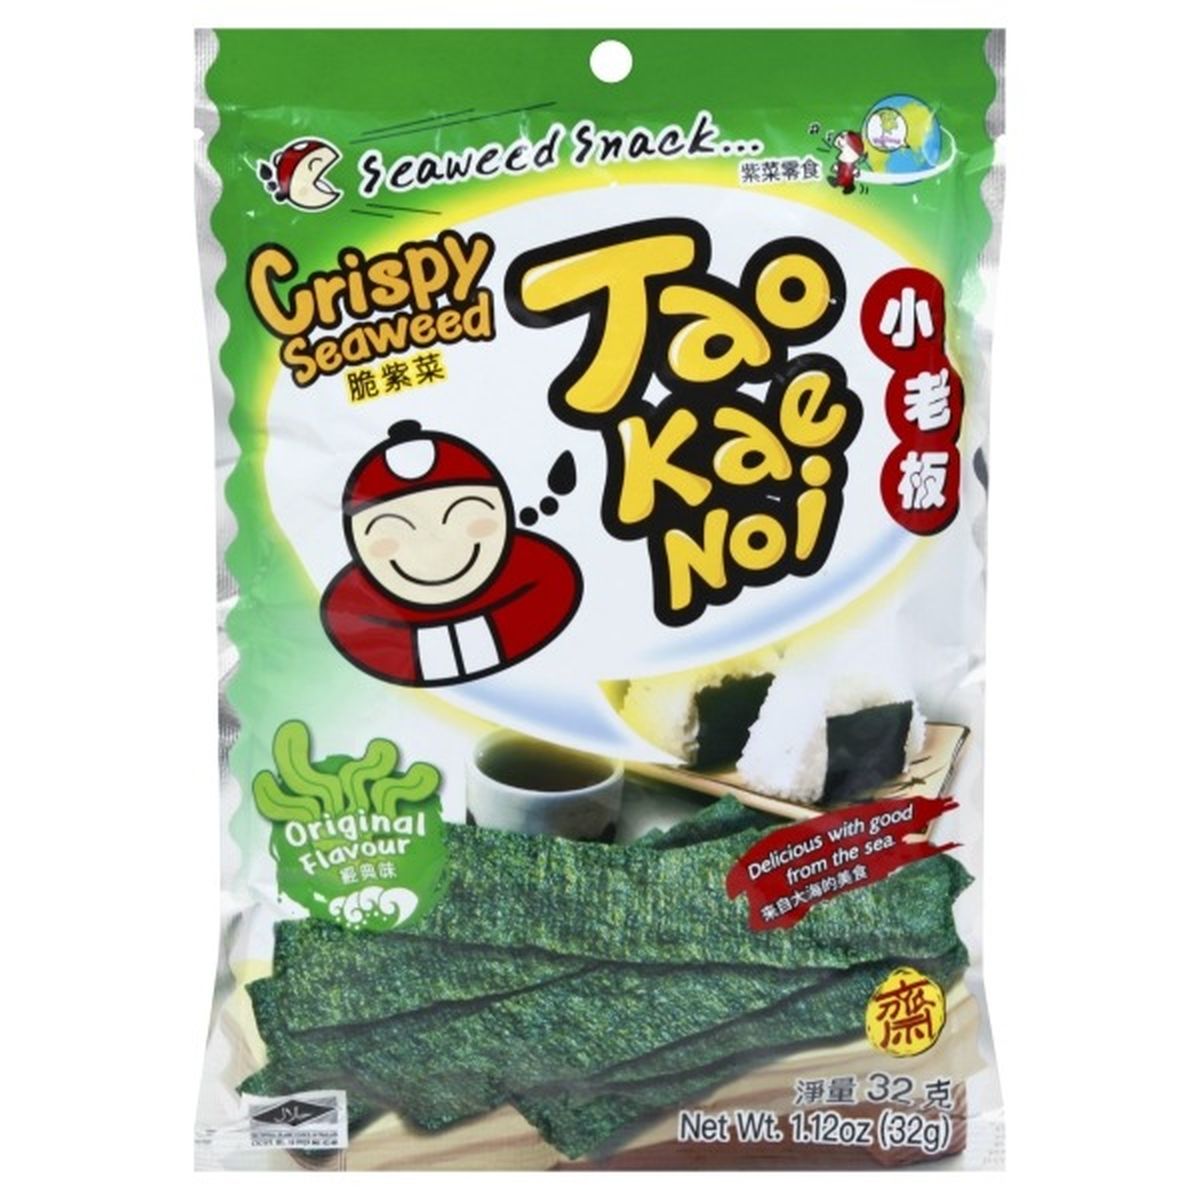 Calories in Tao Kae Noi Seaweed Snack, Crispy, Original Flavour